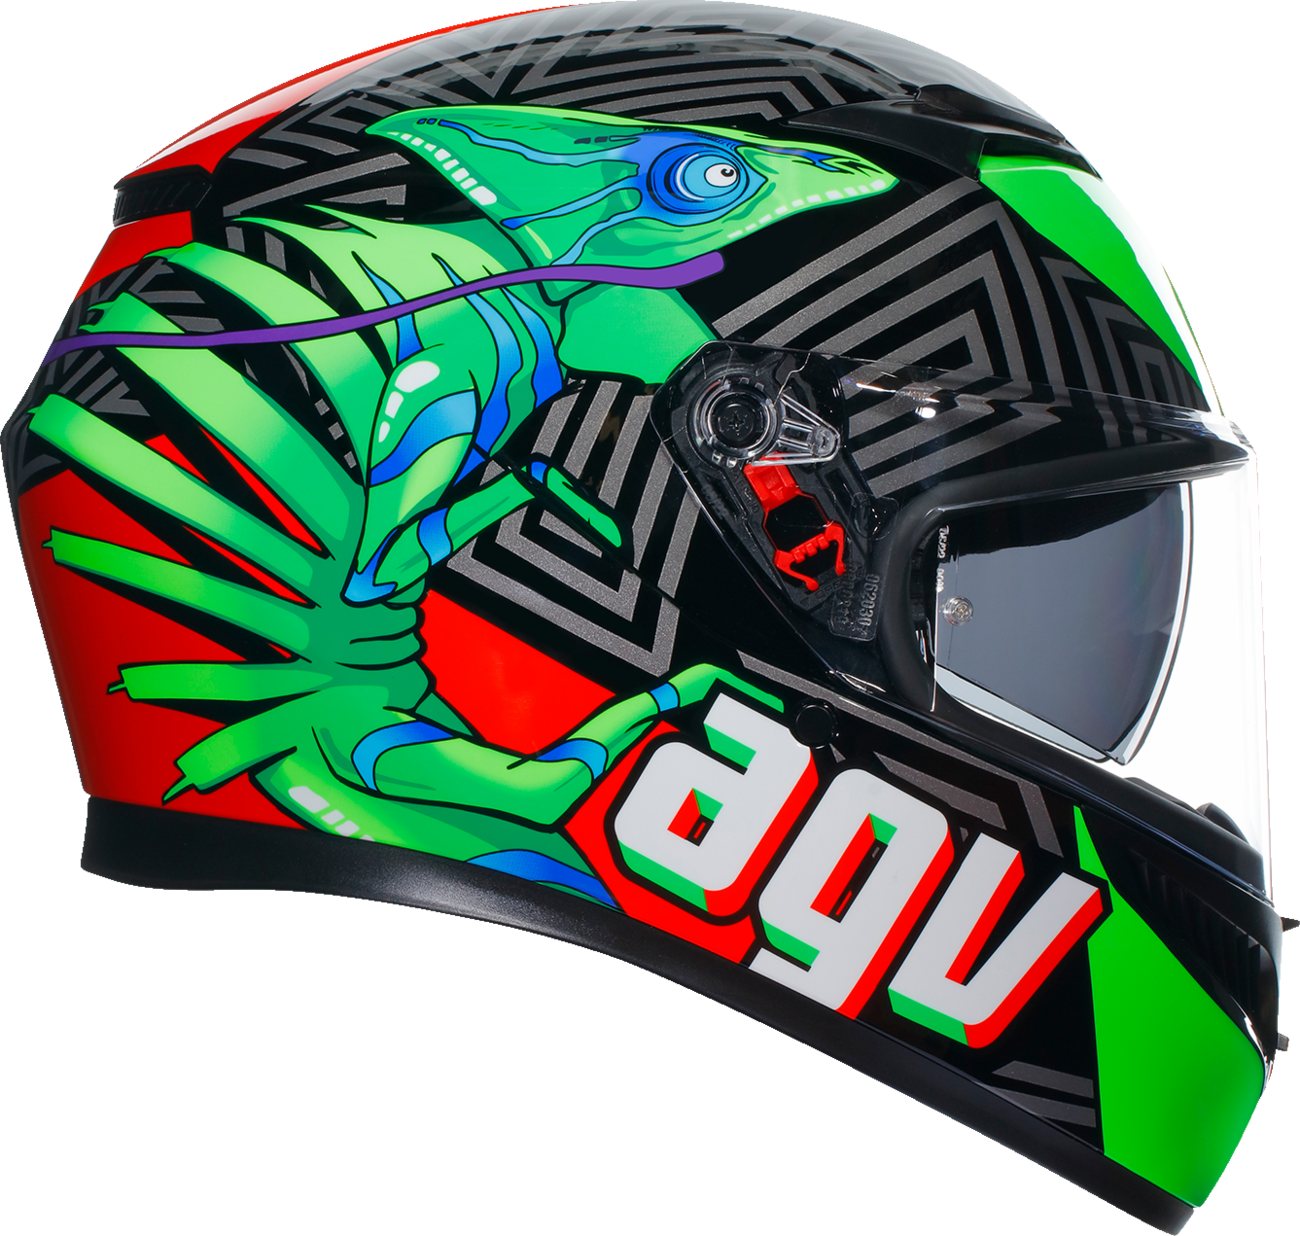 AGV K3 Helmet - Kamaleon - Black/Red/Green - Large 2118381004013L